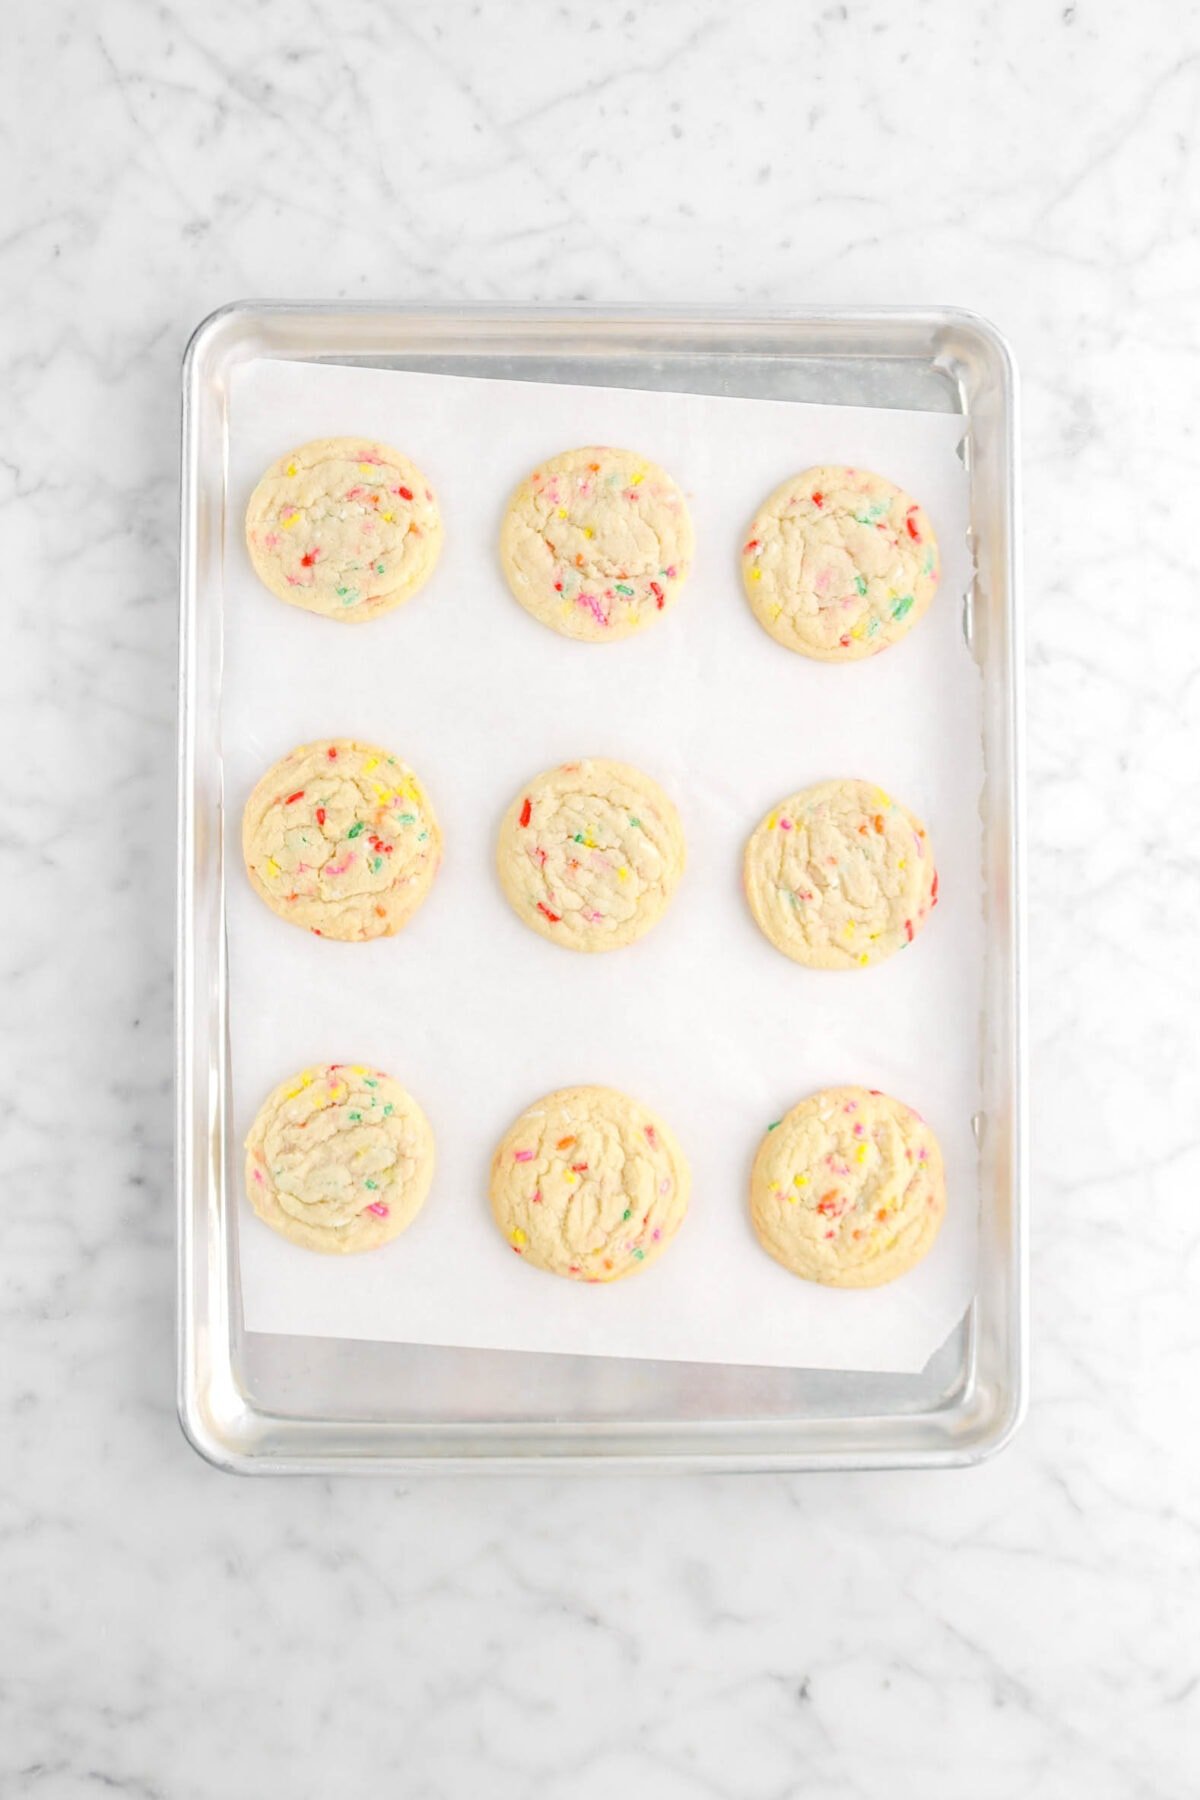 twelve baked funfetti cookies on lined sheet pan